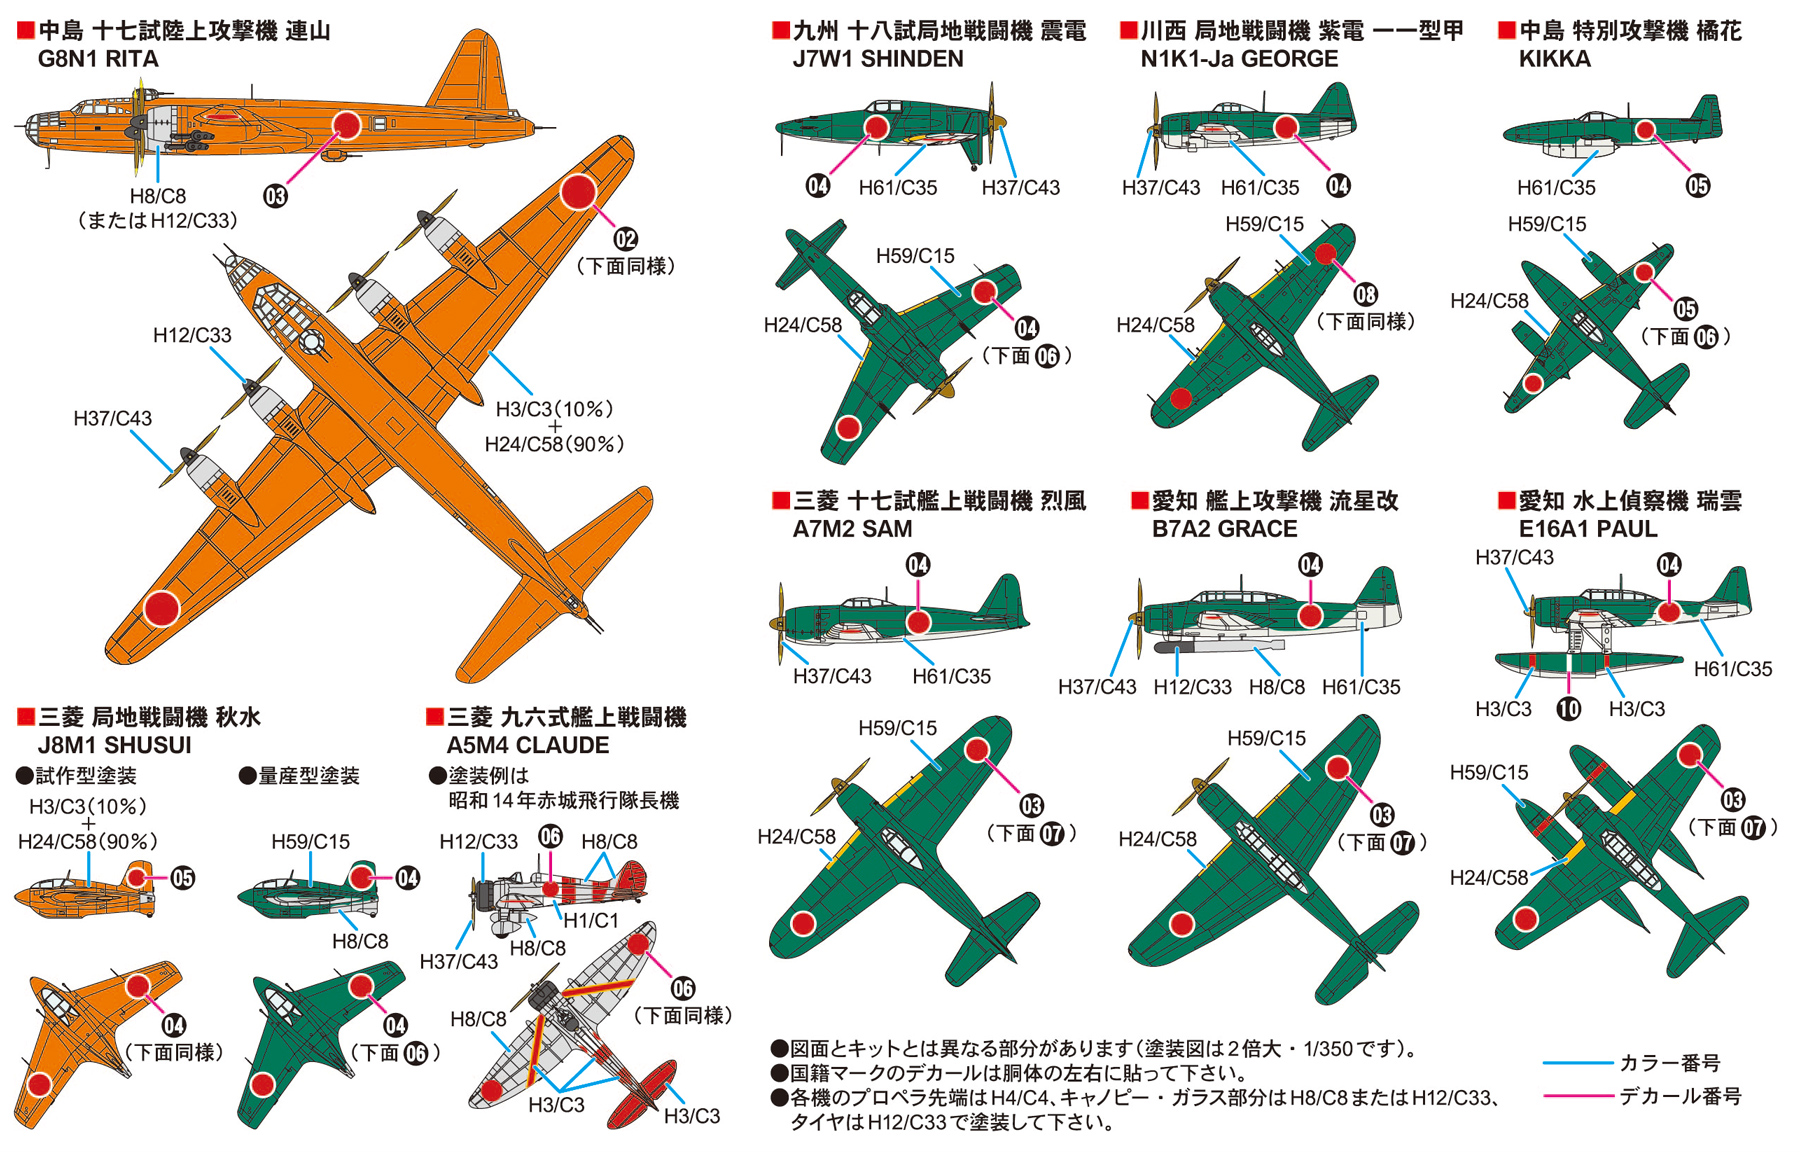 1/700　WWII 日本海軍機 4 - ウインドウを閉じる